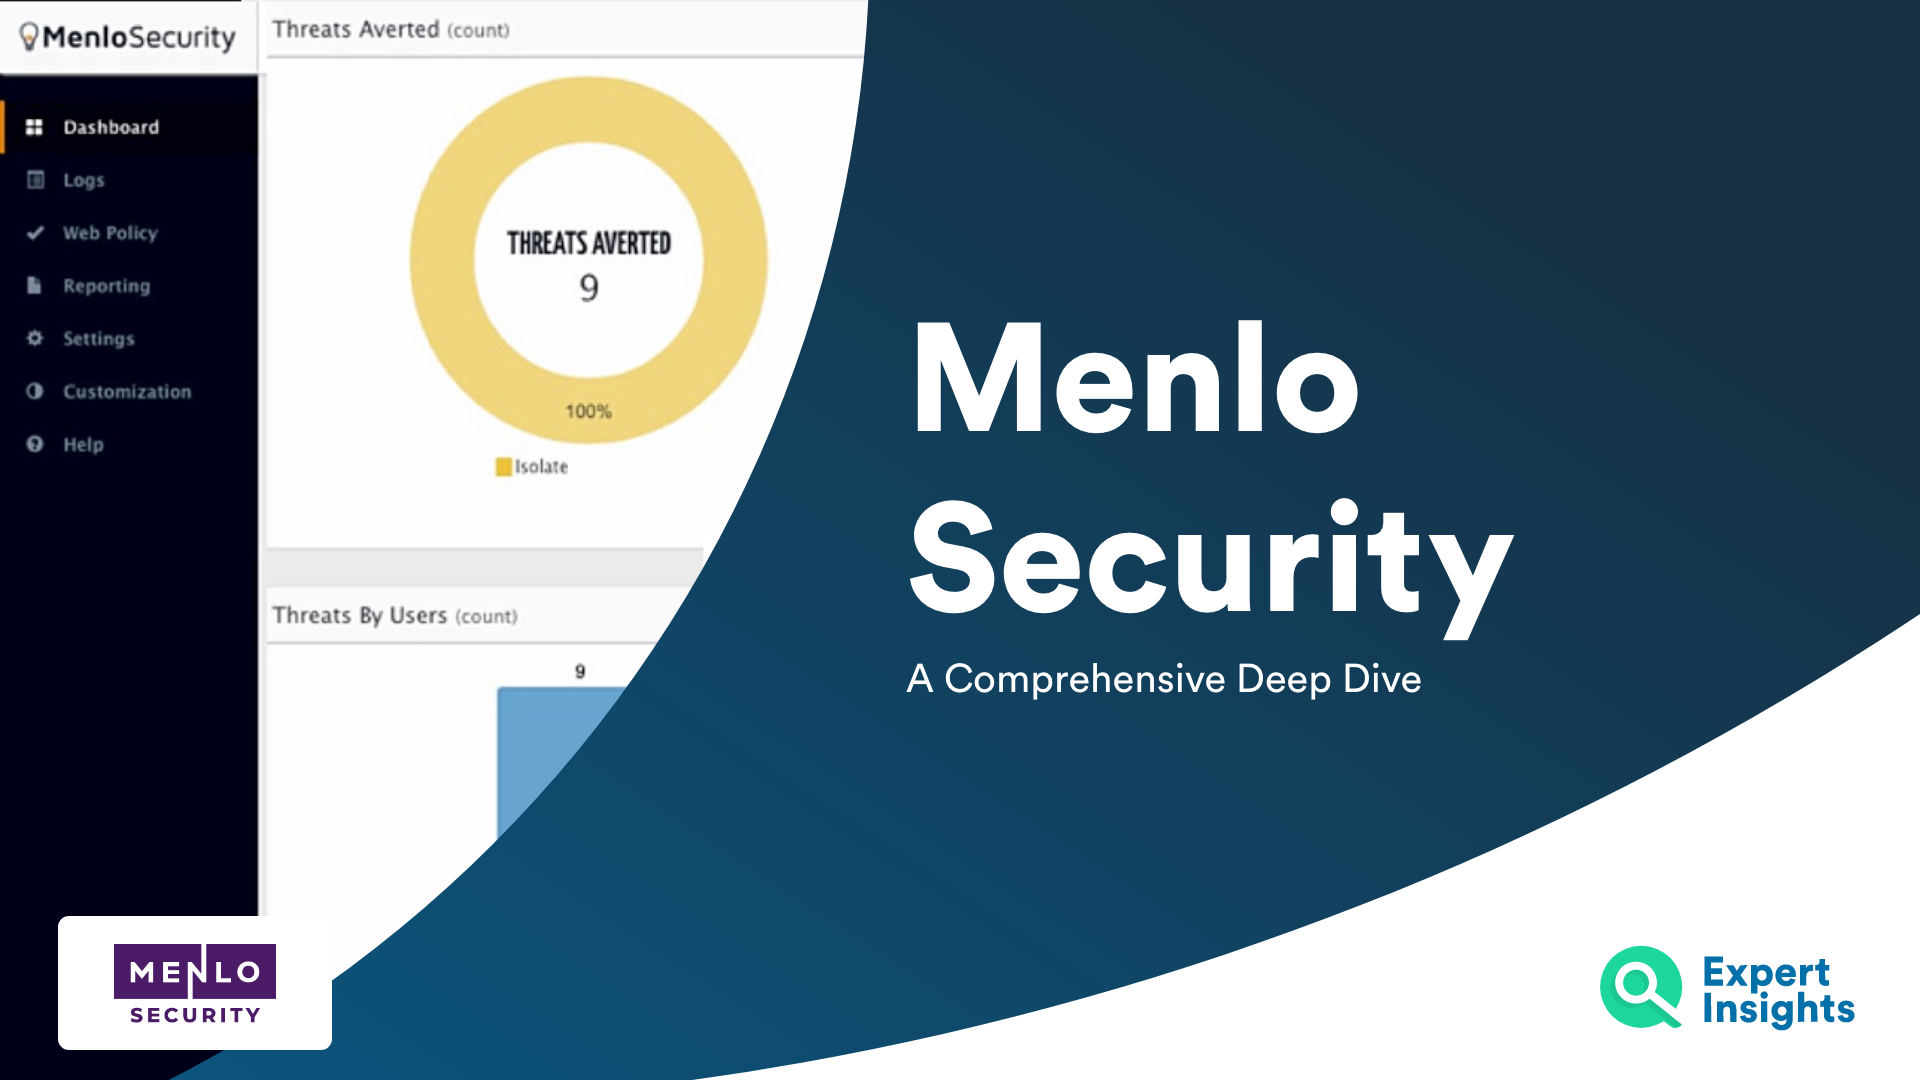 Menlo Security Overview